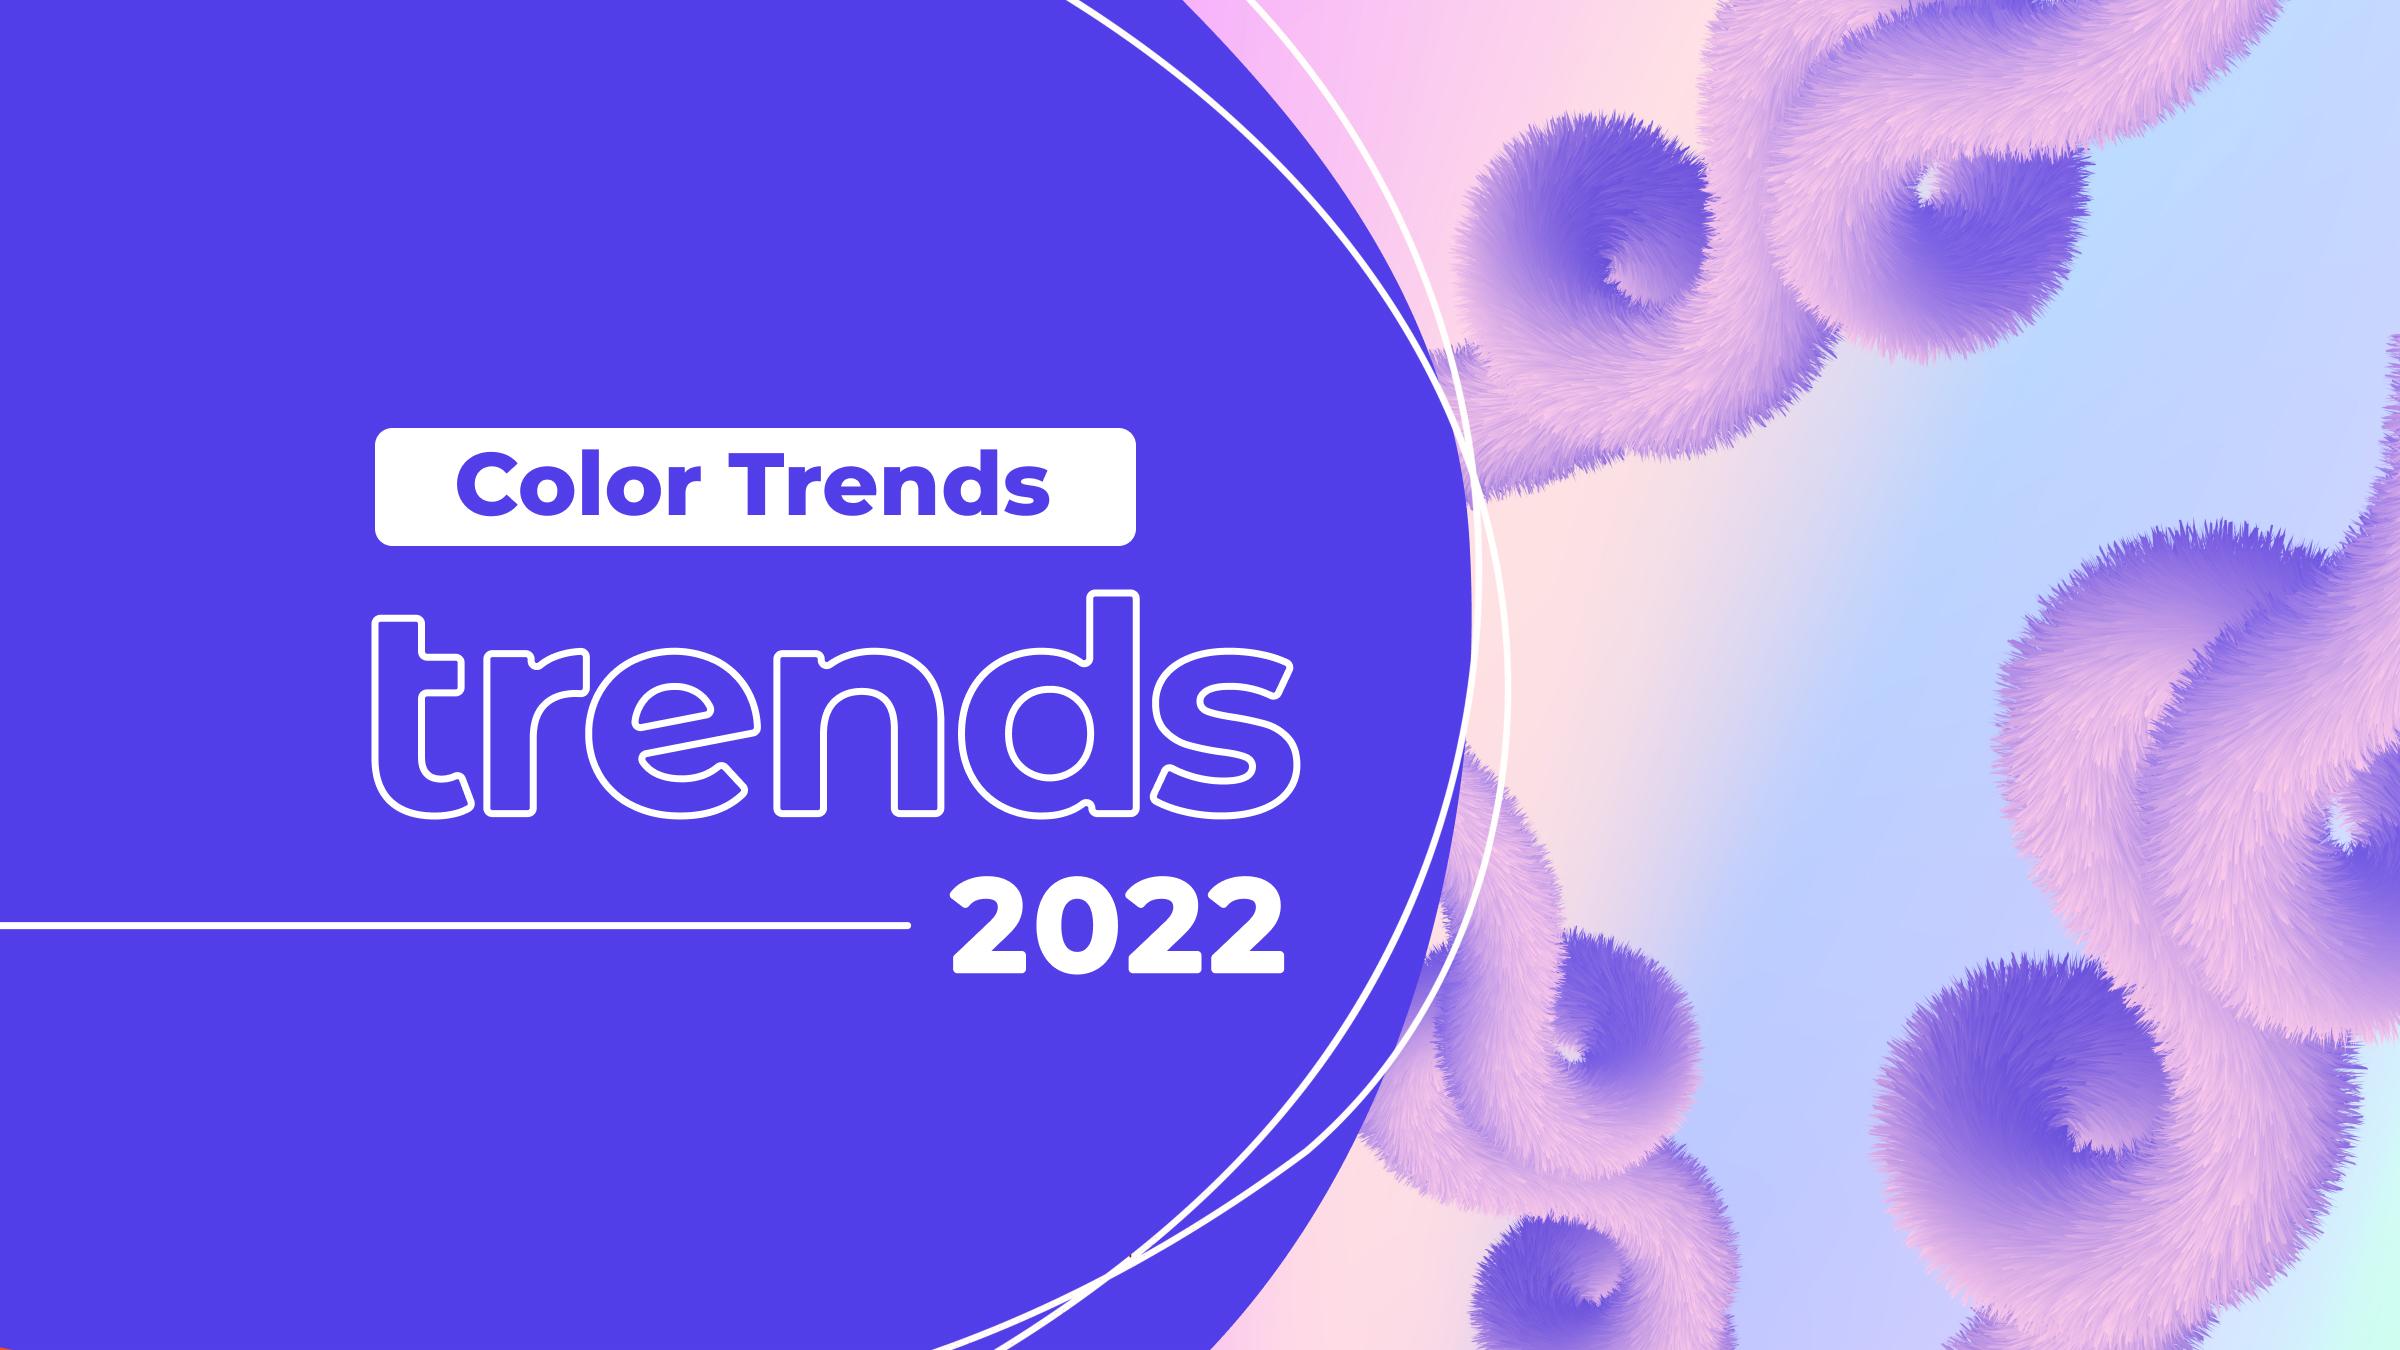 8 Color Trends for 2022 - Design - Envato Elements